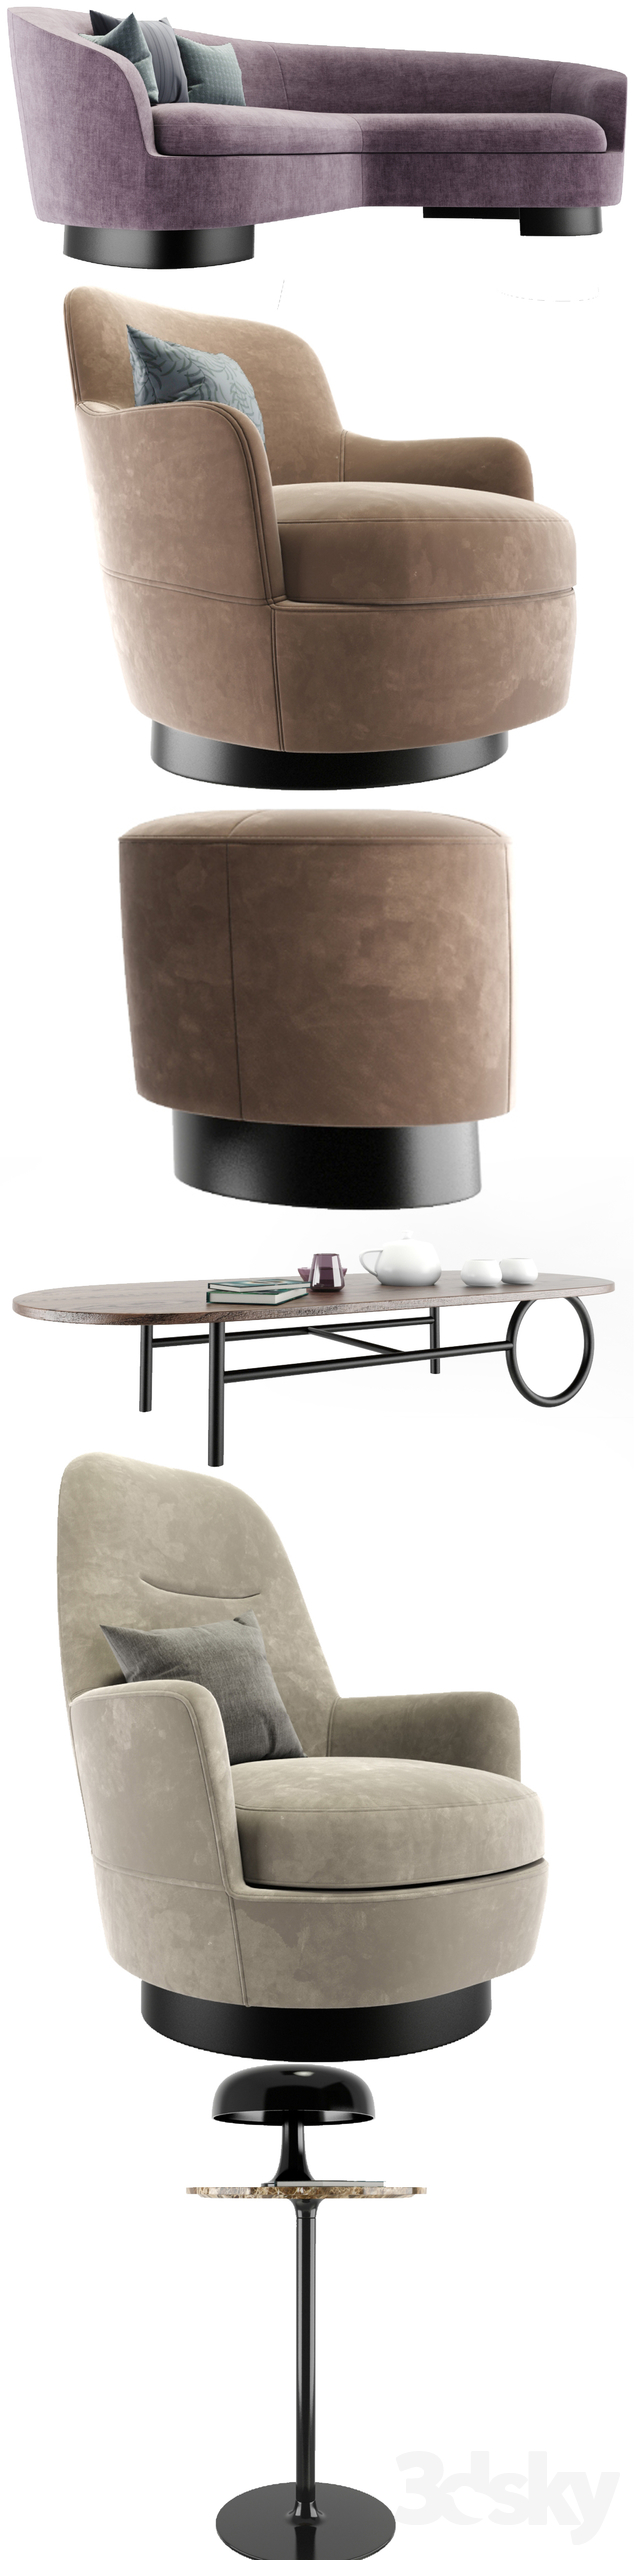 Minotti Sofa And Arm Chair Set